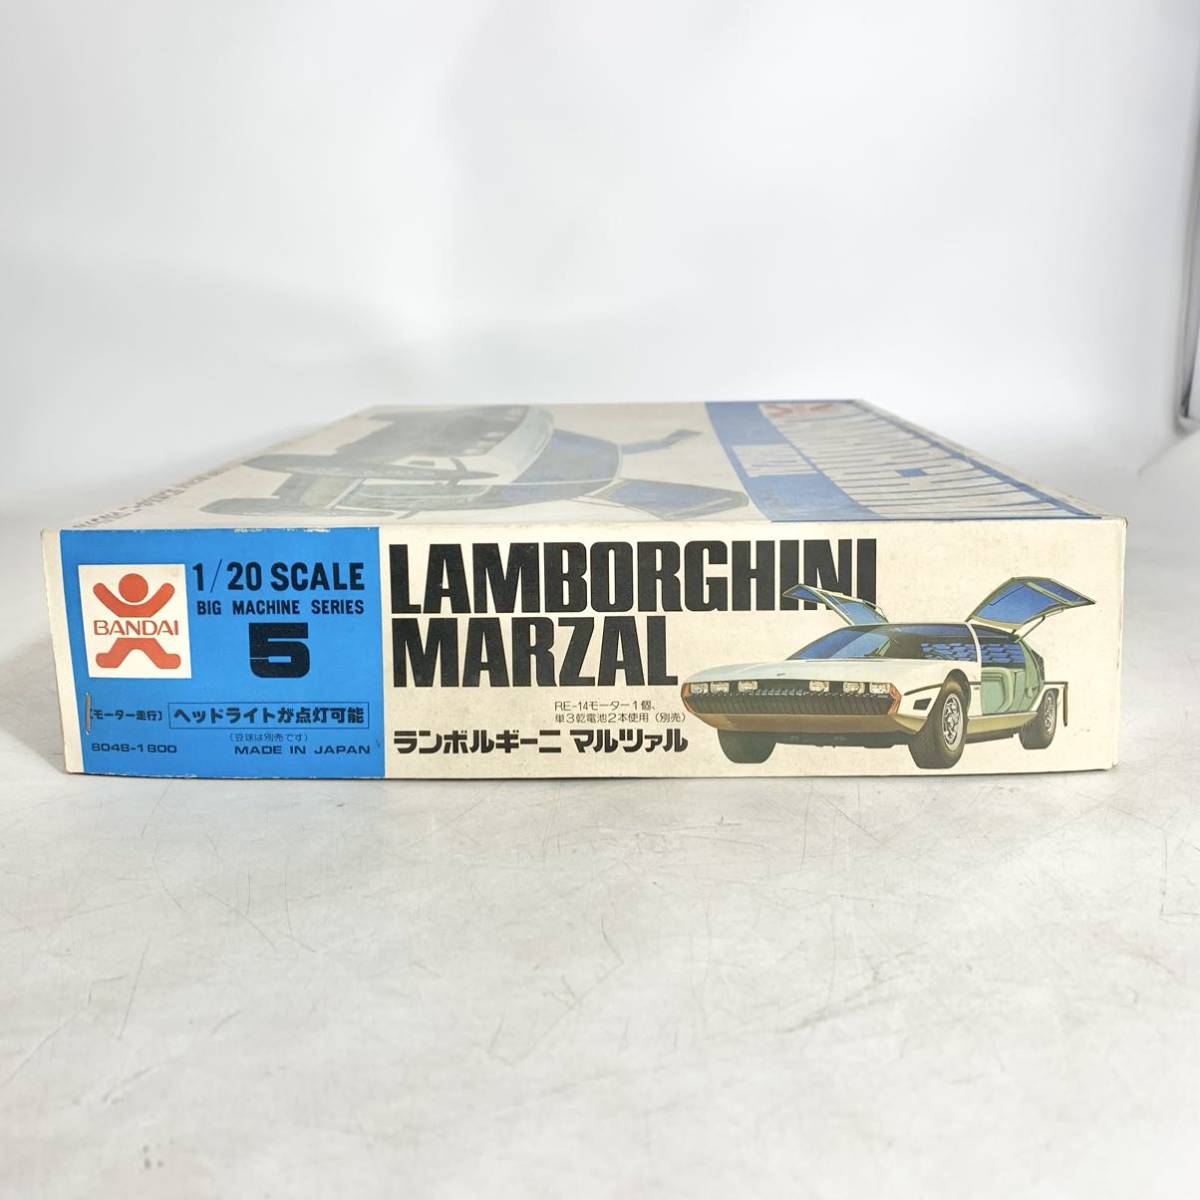  не собран Bandai 1/20 Lamborghini maru tsaruLAMBORGHINI MARZAL motor пробег пластиковая модель BANDAI 8048